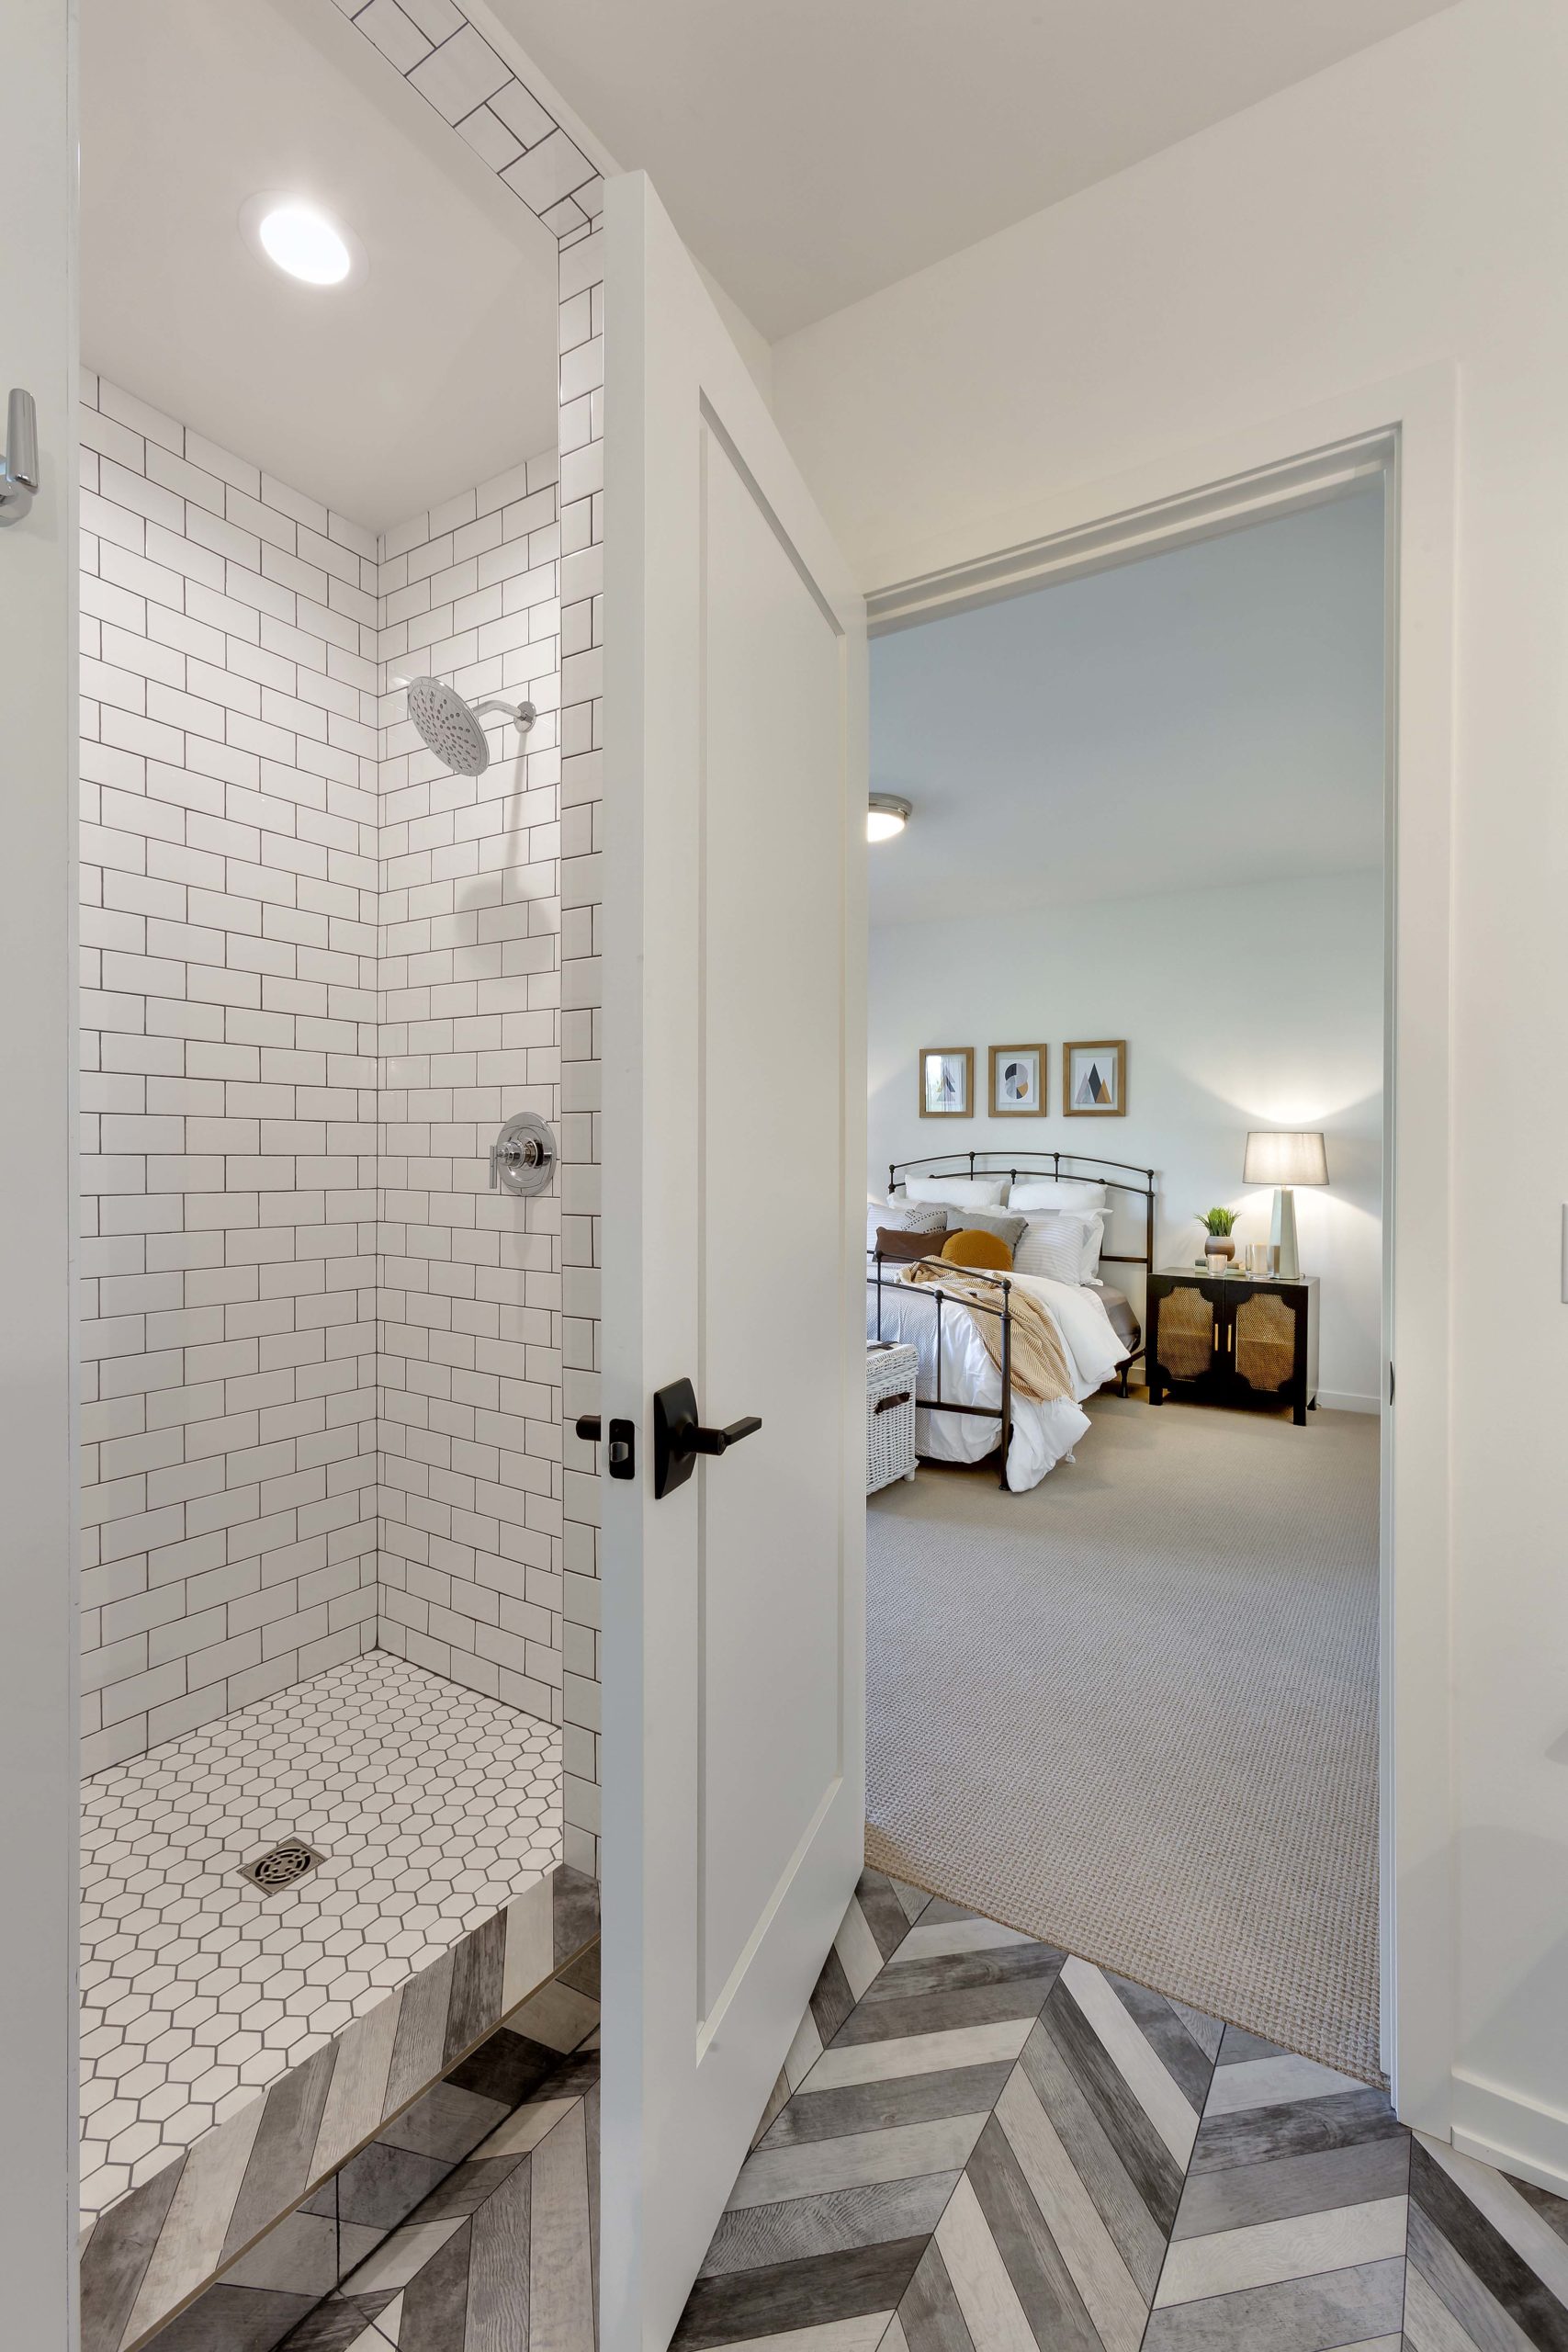 grey chevron floors and white subway tile shower in bathroom